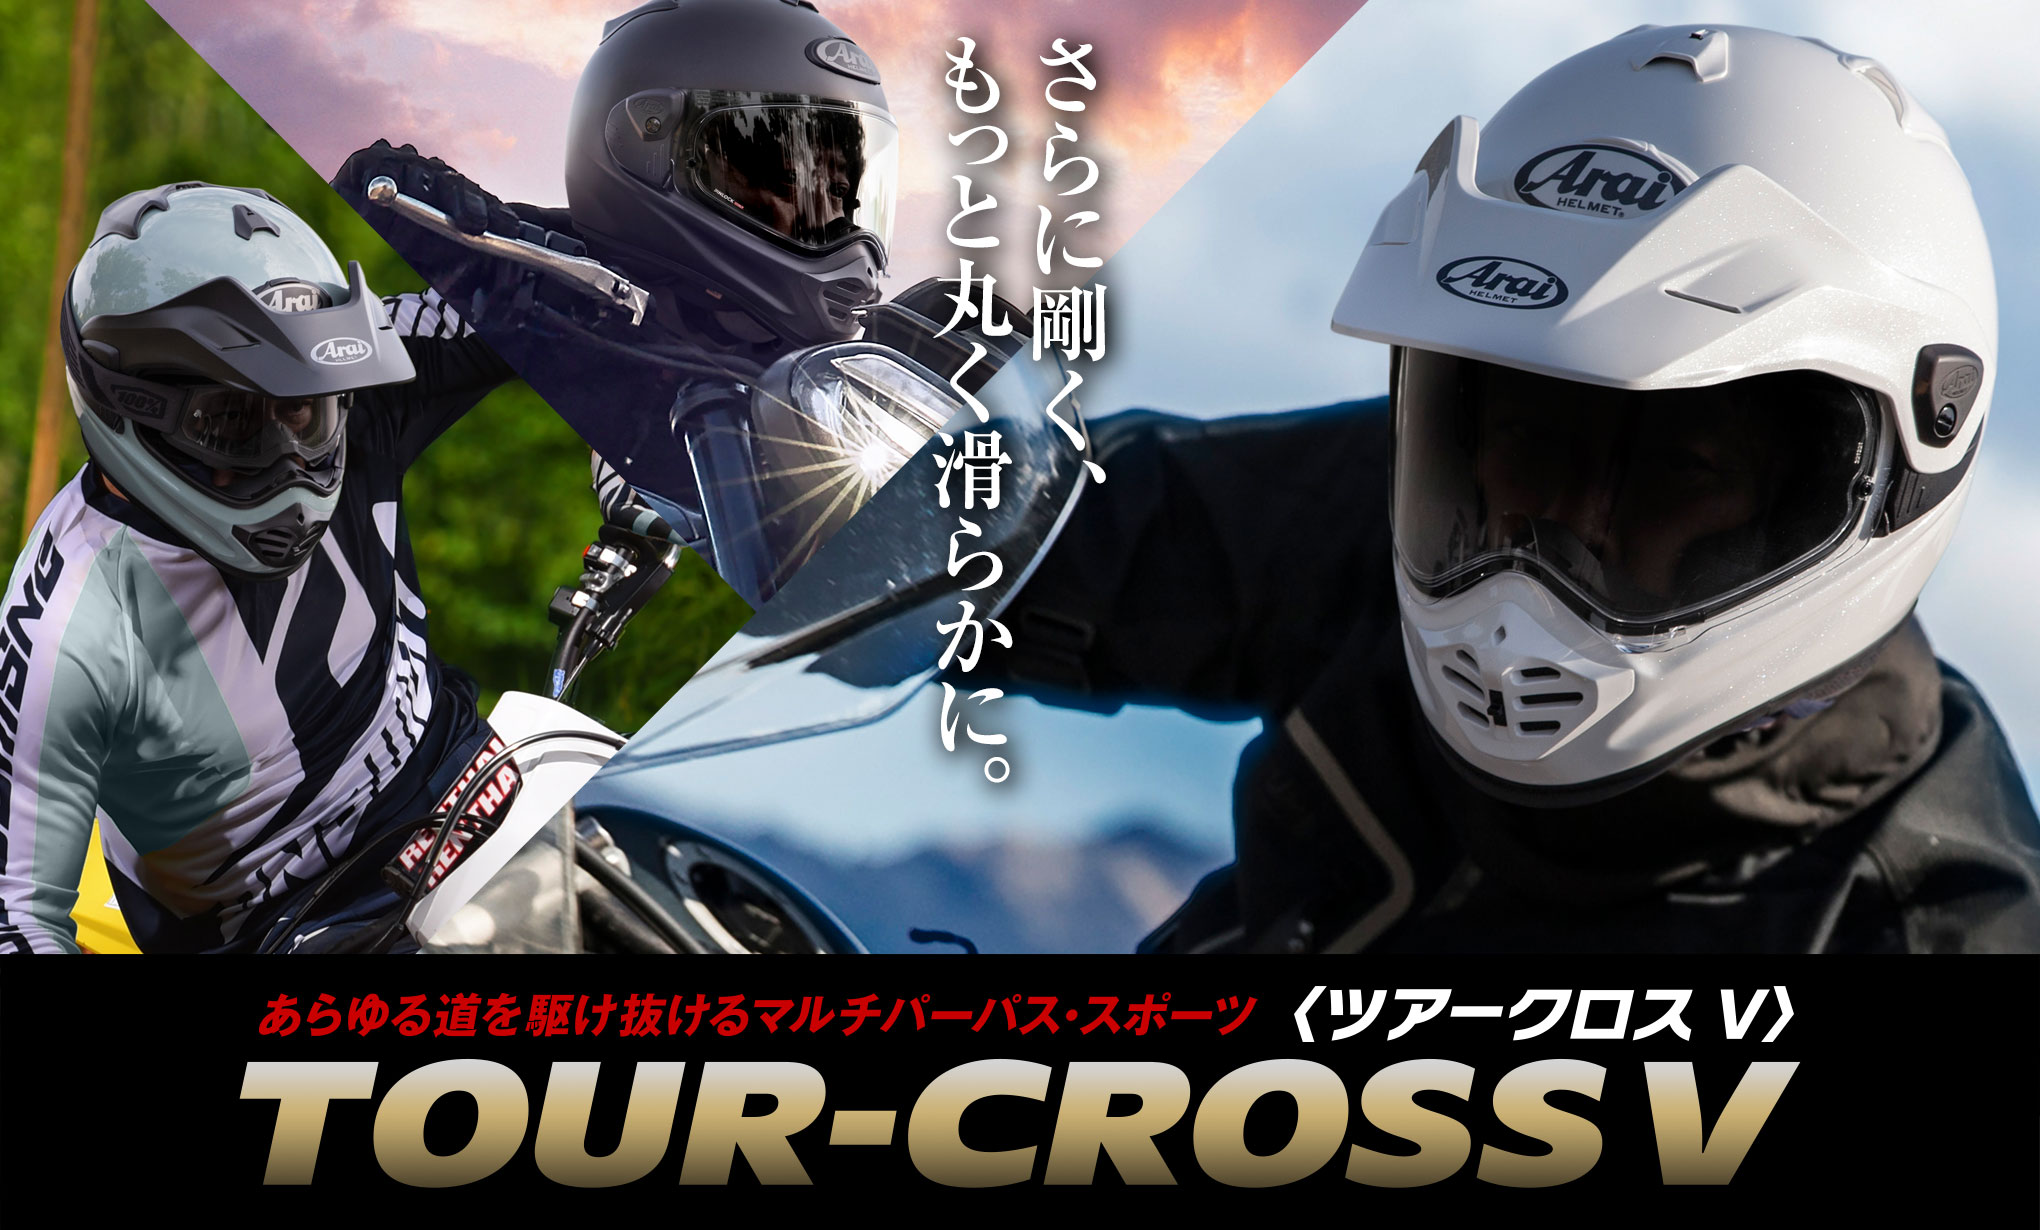 TOUR-CROSS V